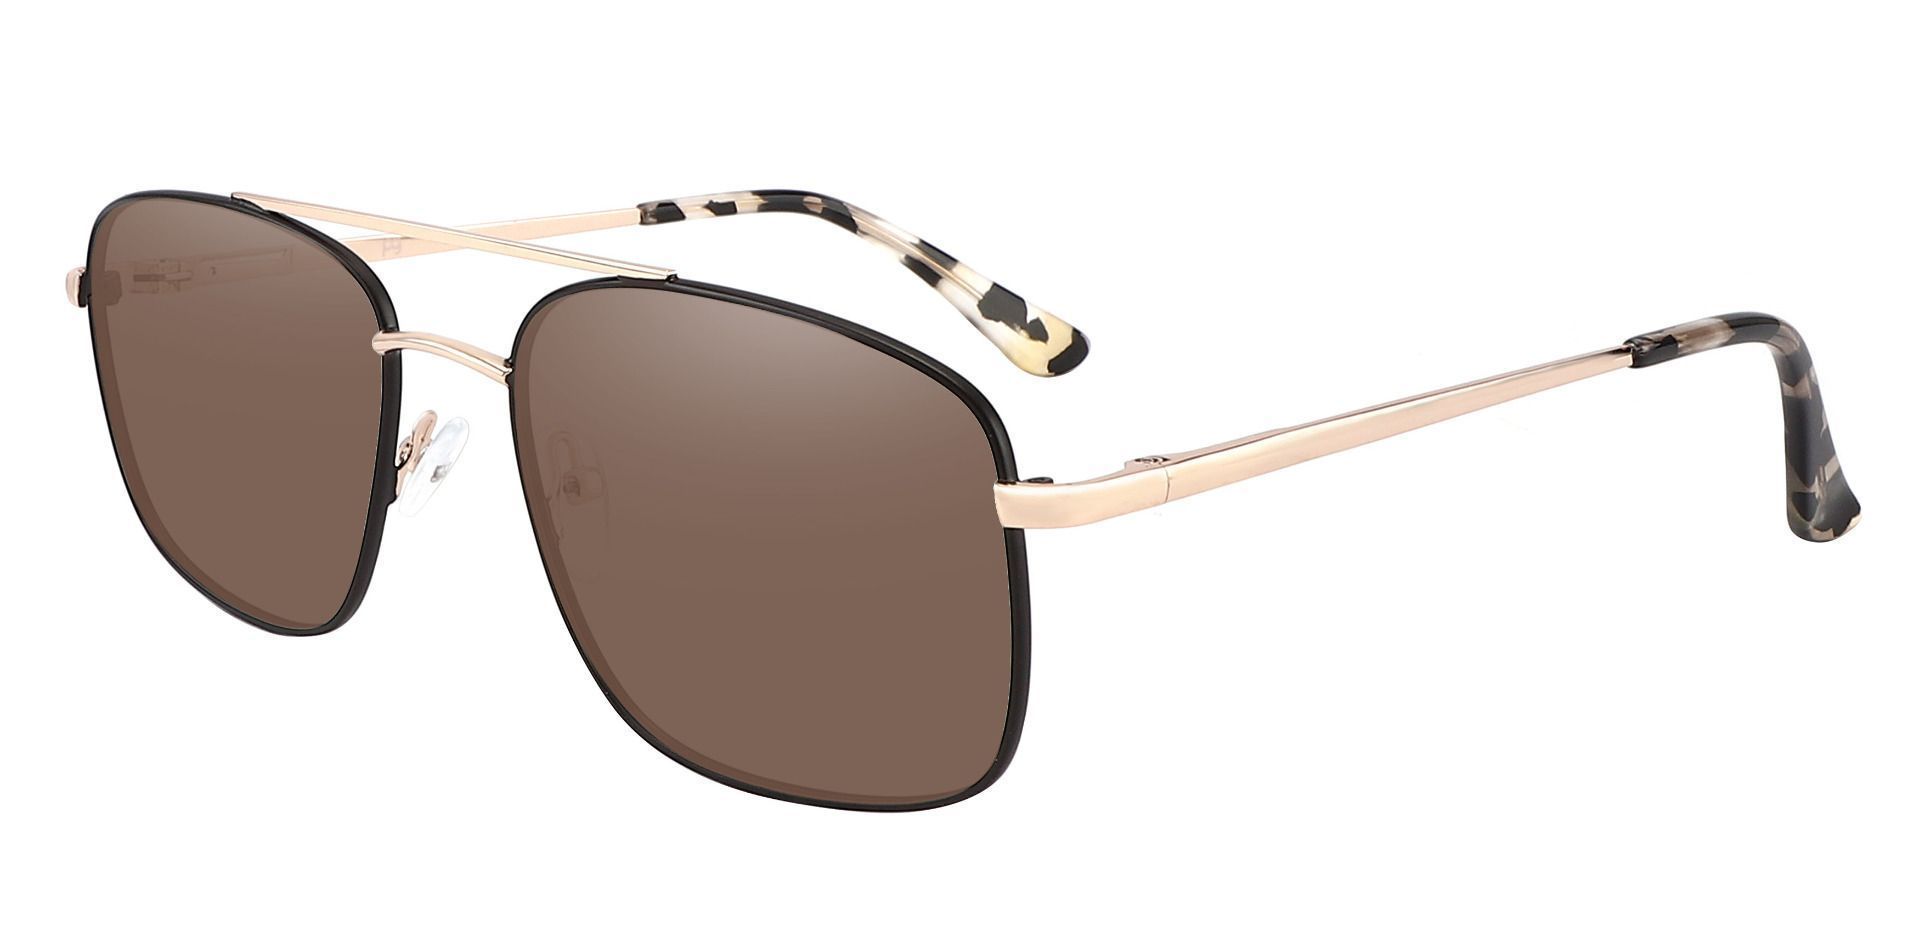 Hiram Aviator Prescription Sunglasses - Black Frame With Brown Lenses